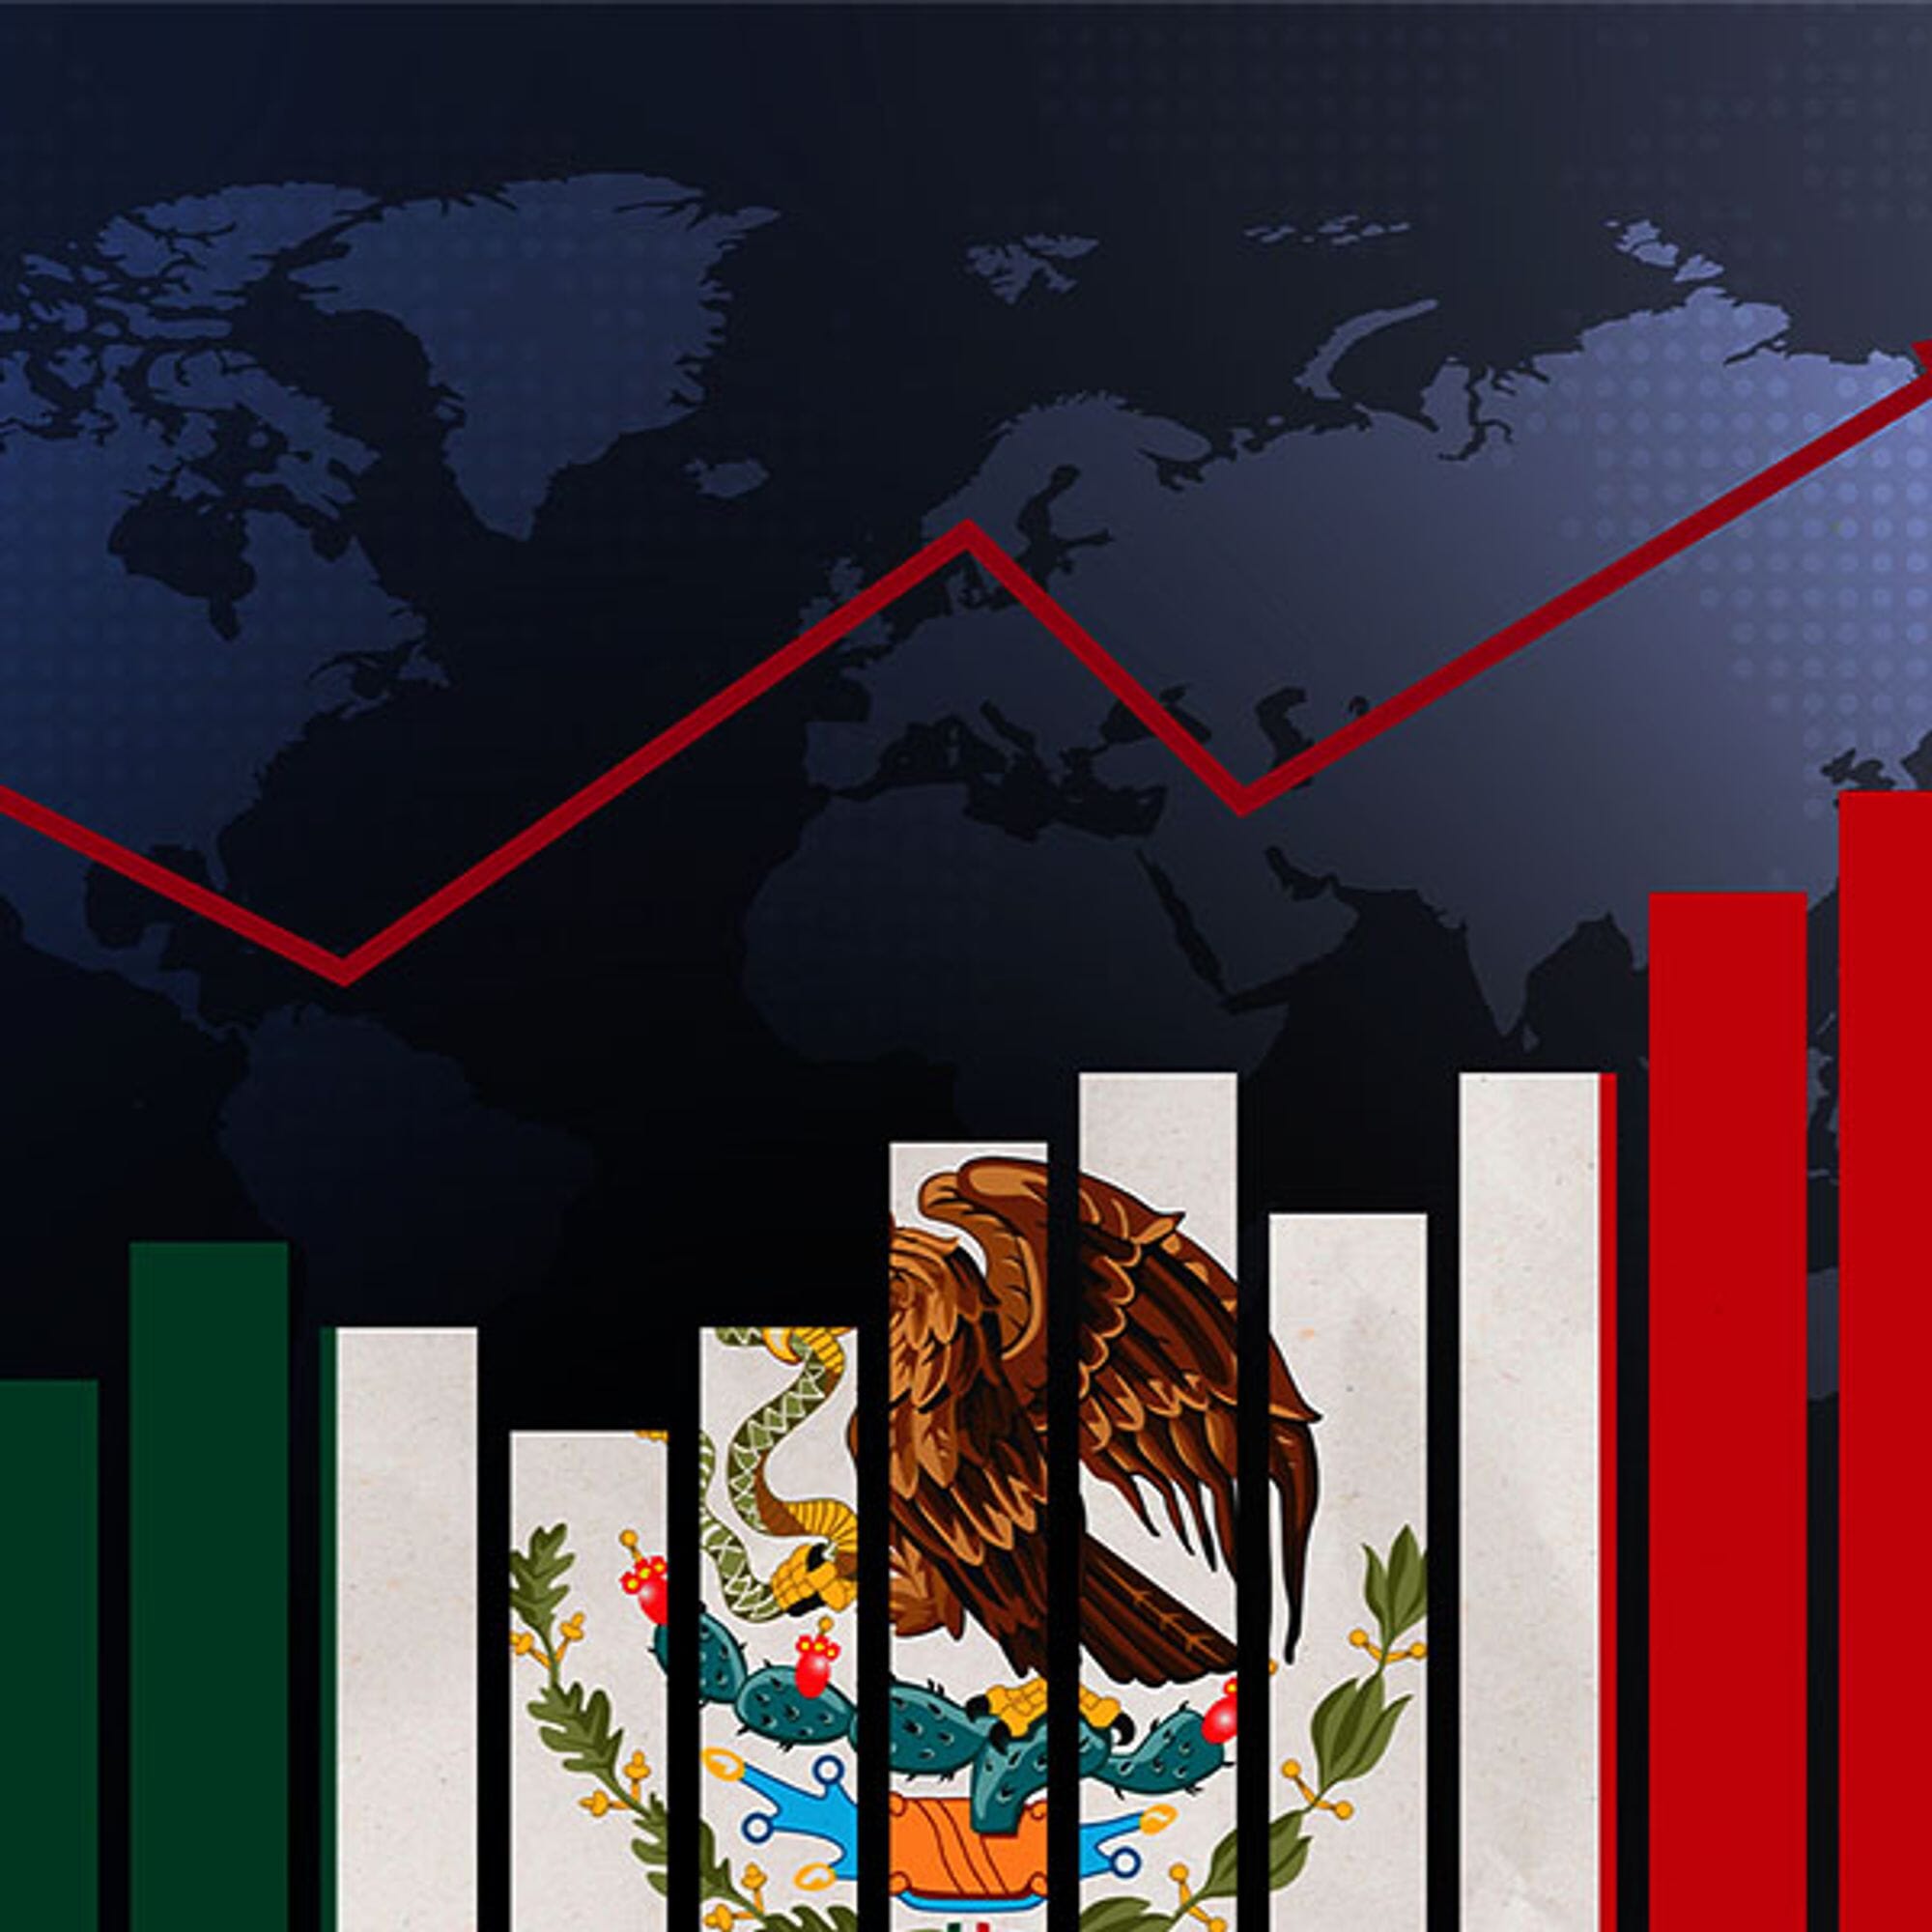 Economía promisoria en México desbloquea inversiones 